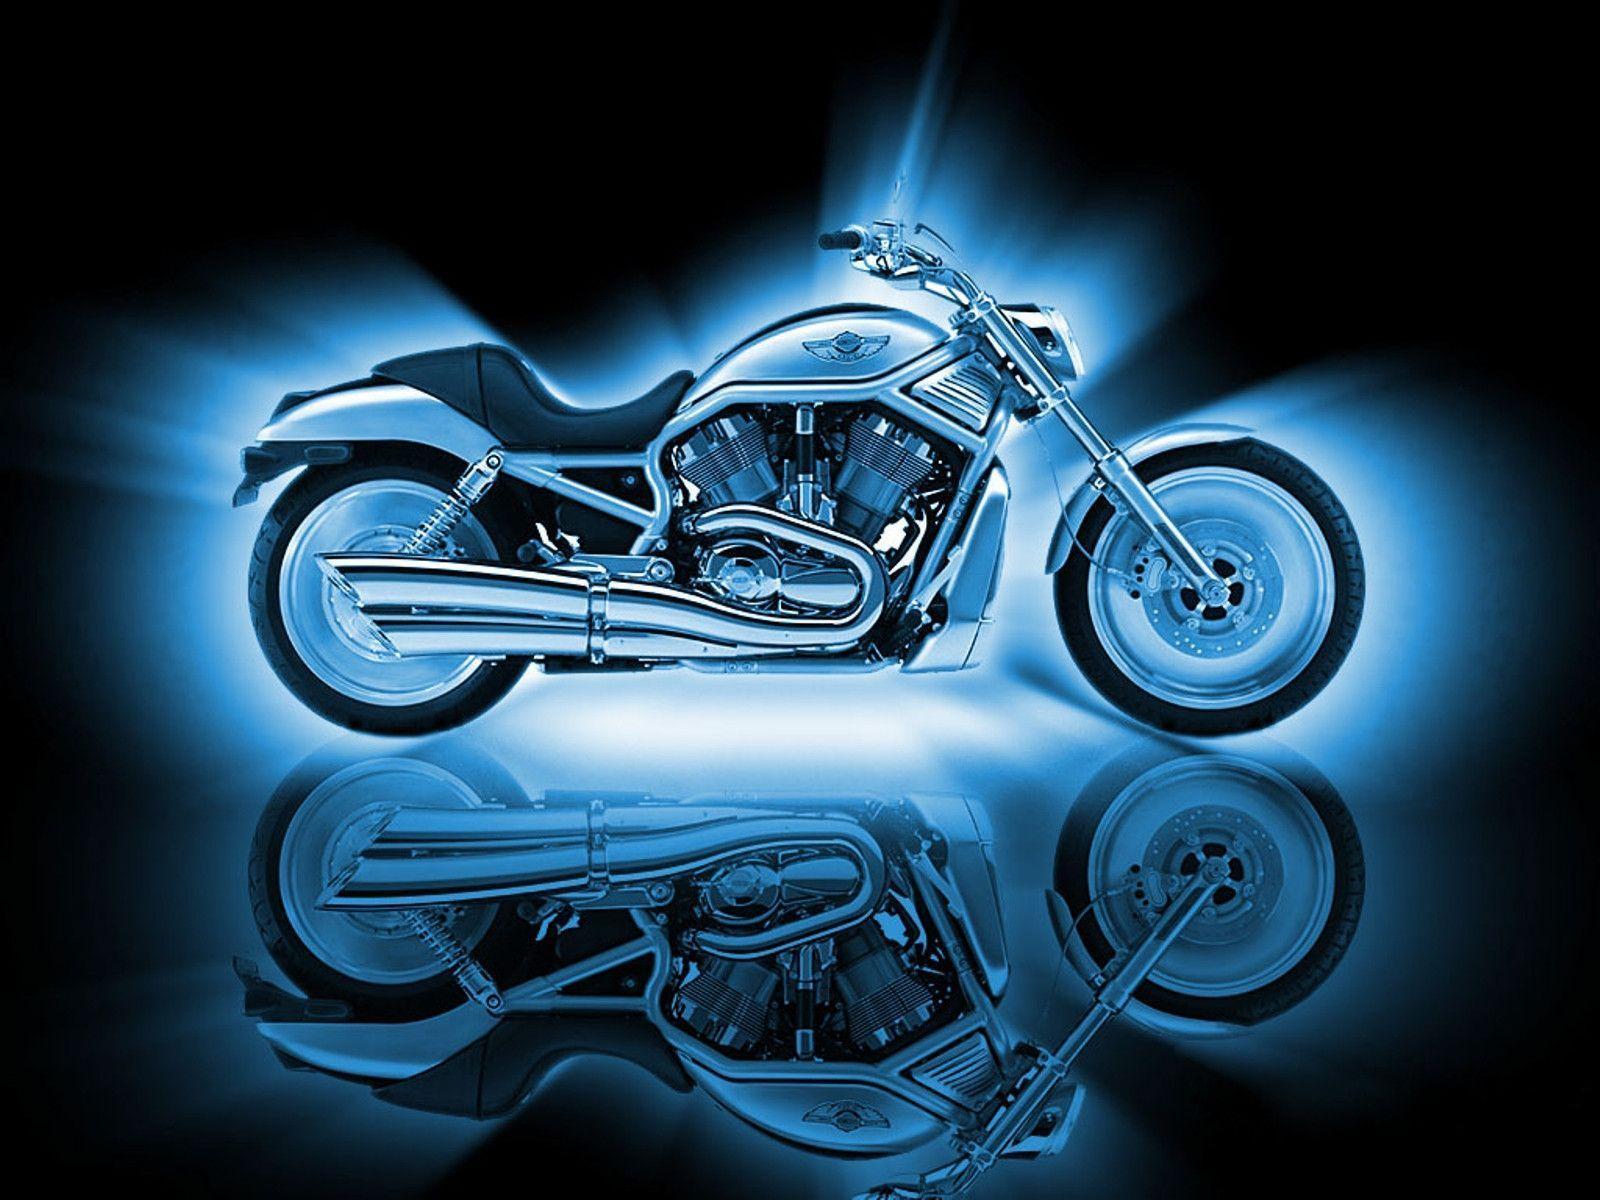 Harley Davidson Background Picture 3D Black and Blue Harley